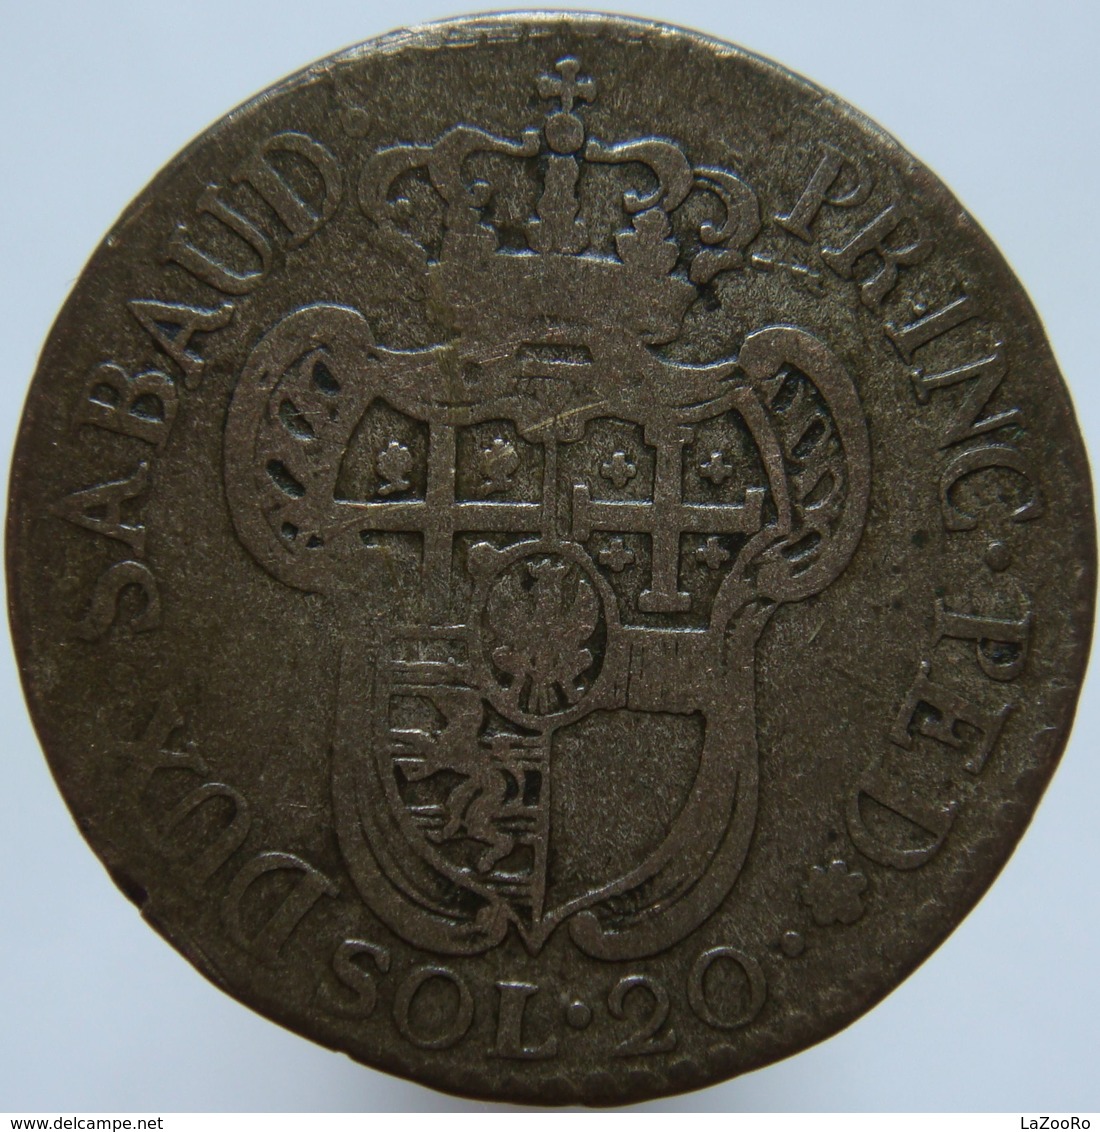 LaZooRo: Italy SARDINIA 20 Soldi 1795 VF - Silver - Piemont-Sardinien-It. Savoyen